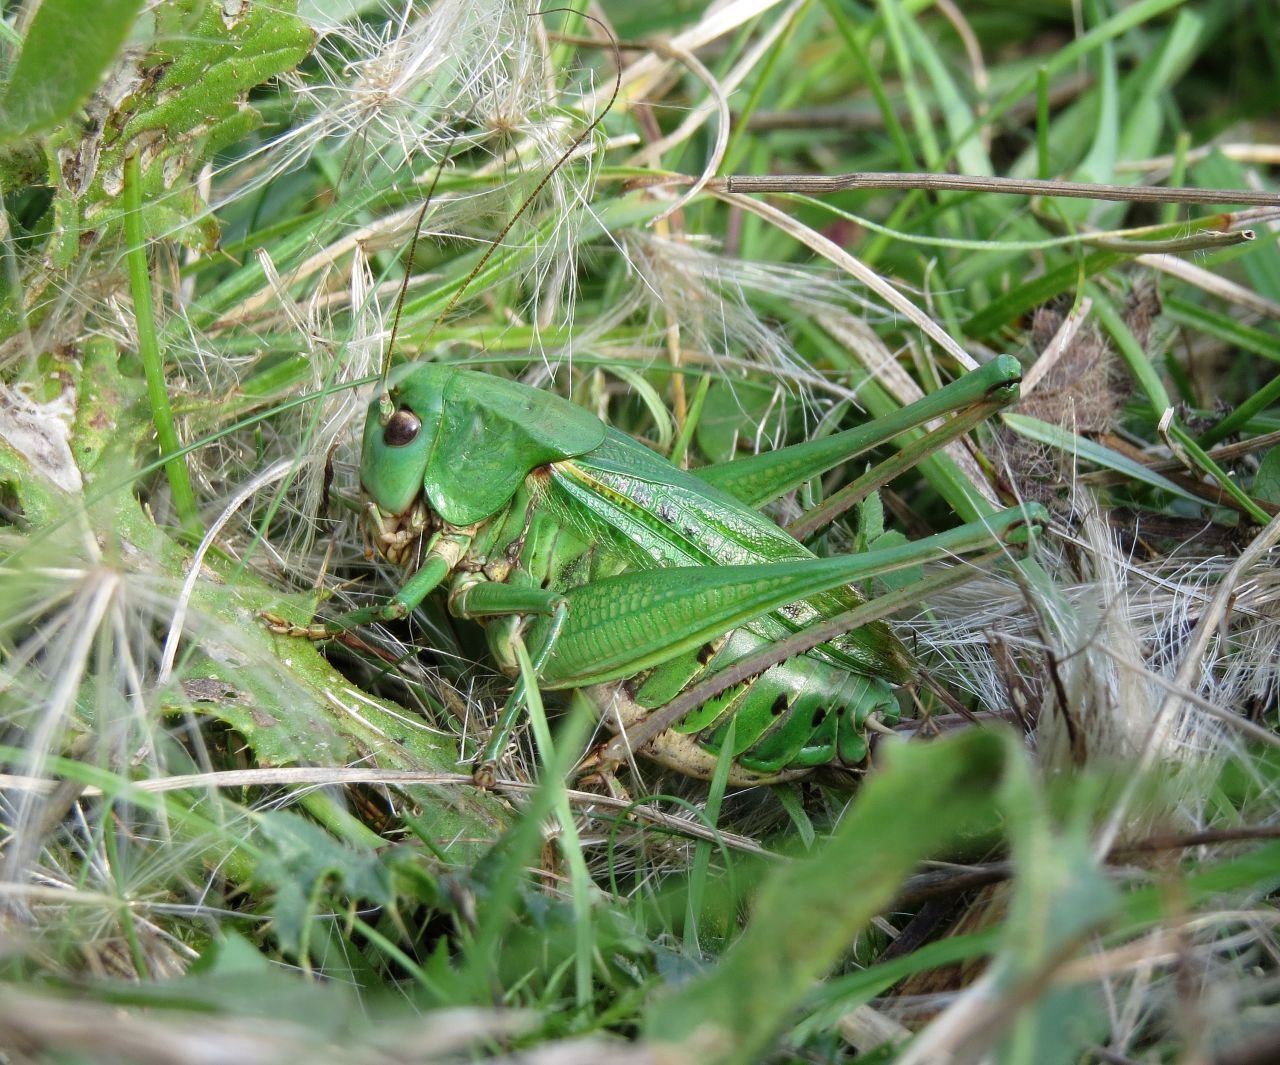 The rare wart-biter bush cricket relies on grasslands for its habitats and is protected under the UK's 1981 <a href="https://www.google.com/search?q=wildlife+and+countryside+act+1981+wart+biter&sxsrf=ALiCzsZ1Vg-ZBfzuBQY-WSCO5bfxwTpmBg%3A1654702825187&ei=6cKgYoKAC4uG8gKNjYzICQ&ved=0ahUKEwjCmOqwmJ74AhULg1wKHY0GA5kQ4dUDCA4&uact=5&oq=wildlife+and+countryside+act+1981+wart+biter&gs_lcp=Cgdnd3Mtd2l6EAMyBQgAEKIEOgcIIxCwAxAnOgcIABBHELADOgYIABAeEBY6BQghEKABOgcIIRAKEKABOgQIIRAVSgQIQRgASgQIRhgAUPAFWJUWYN4ZaAJwAXgAgAF9iAG1BpIBBDEwLjGYAQCgAQHIAQrAAQE&sclient=gws-wiz" target="_blank" target="_blank">Wildlife and Countryside Act</a>.